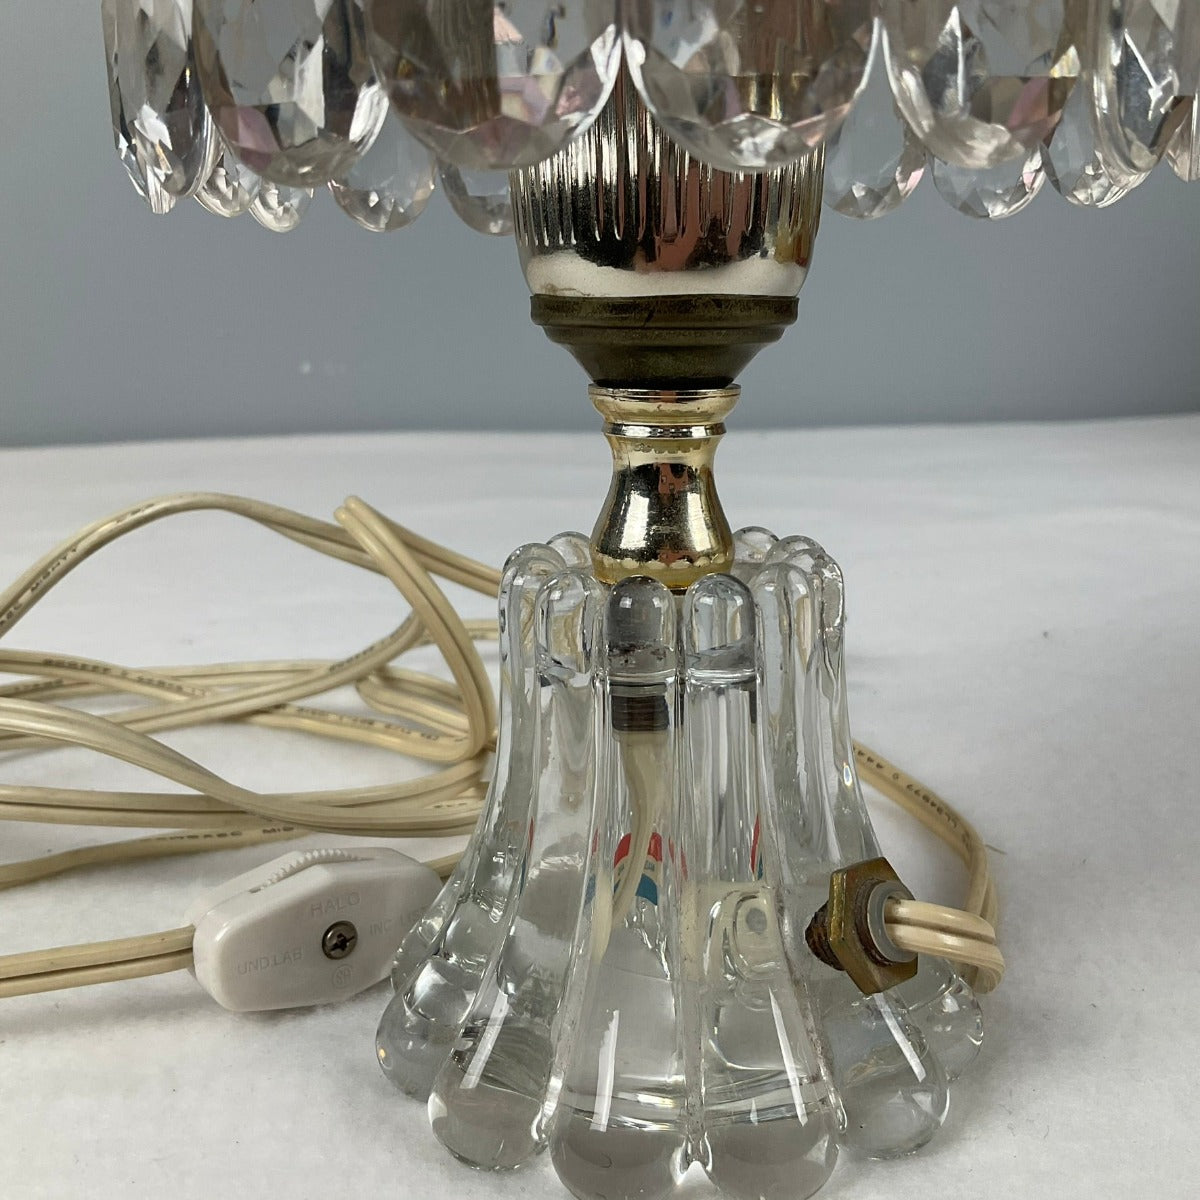 Michelotti Boudoir Lamp - Vintage Single Tier Pink Crystal Glass - Lamp Base